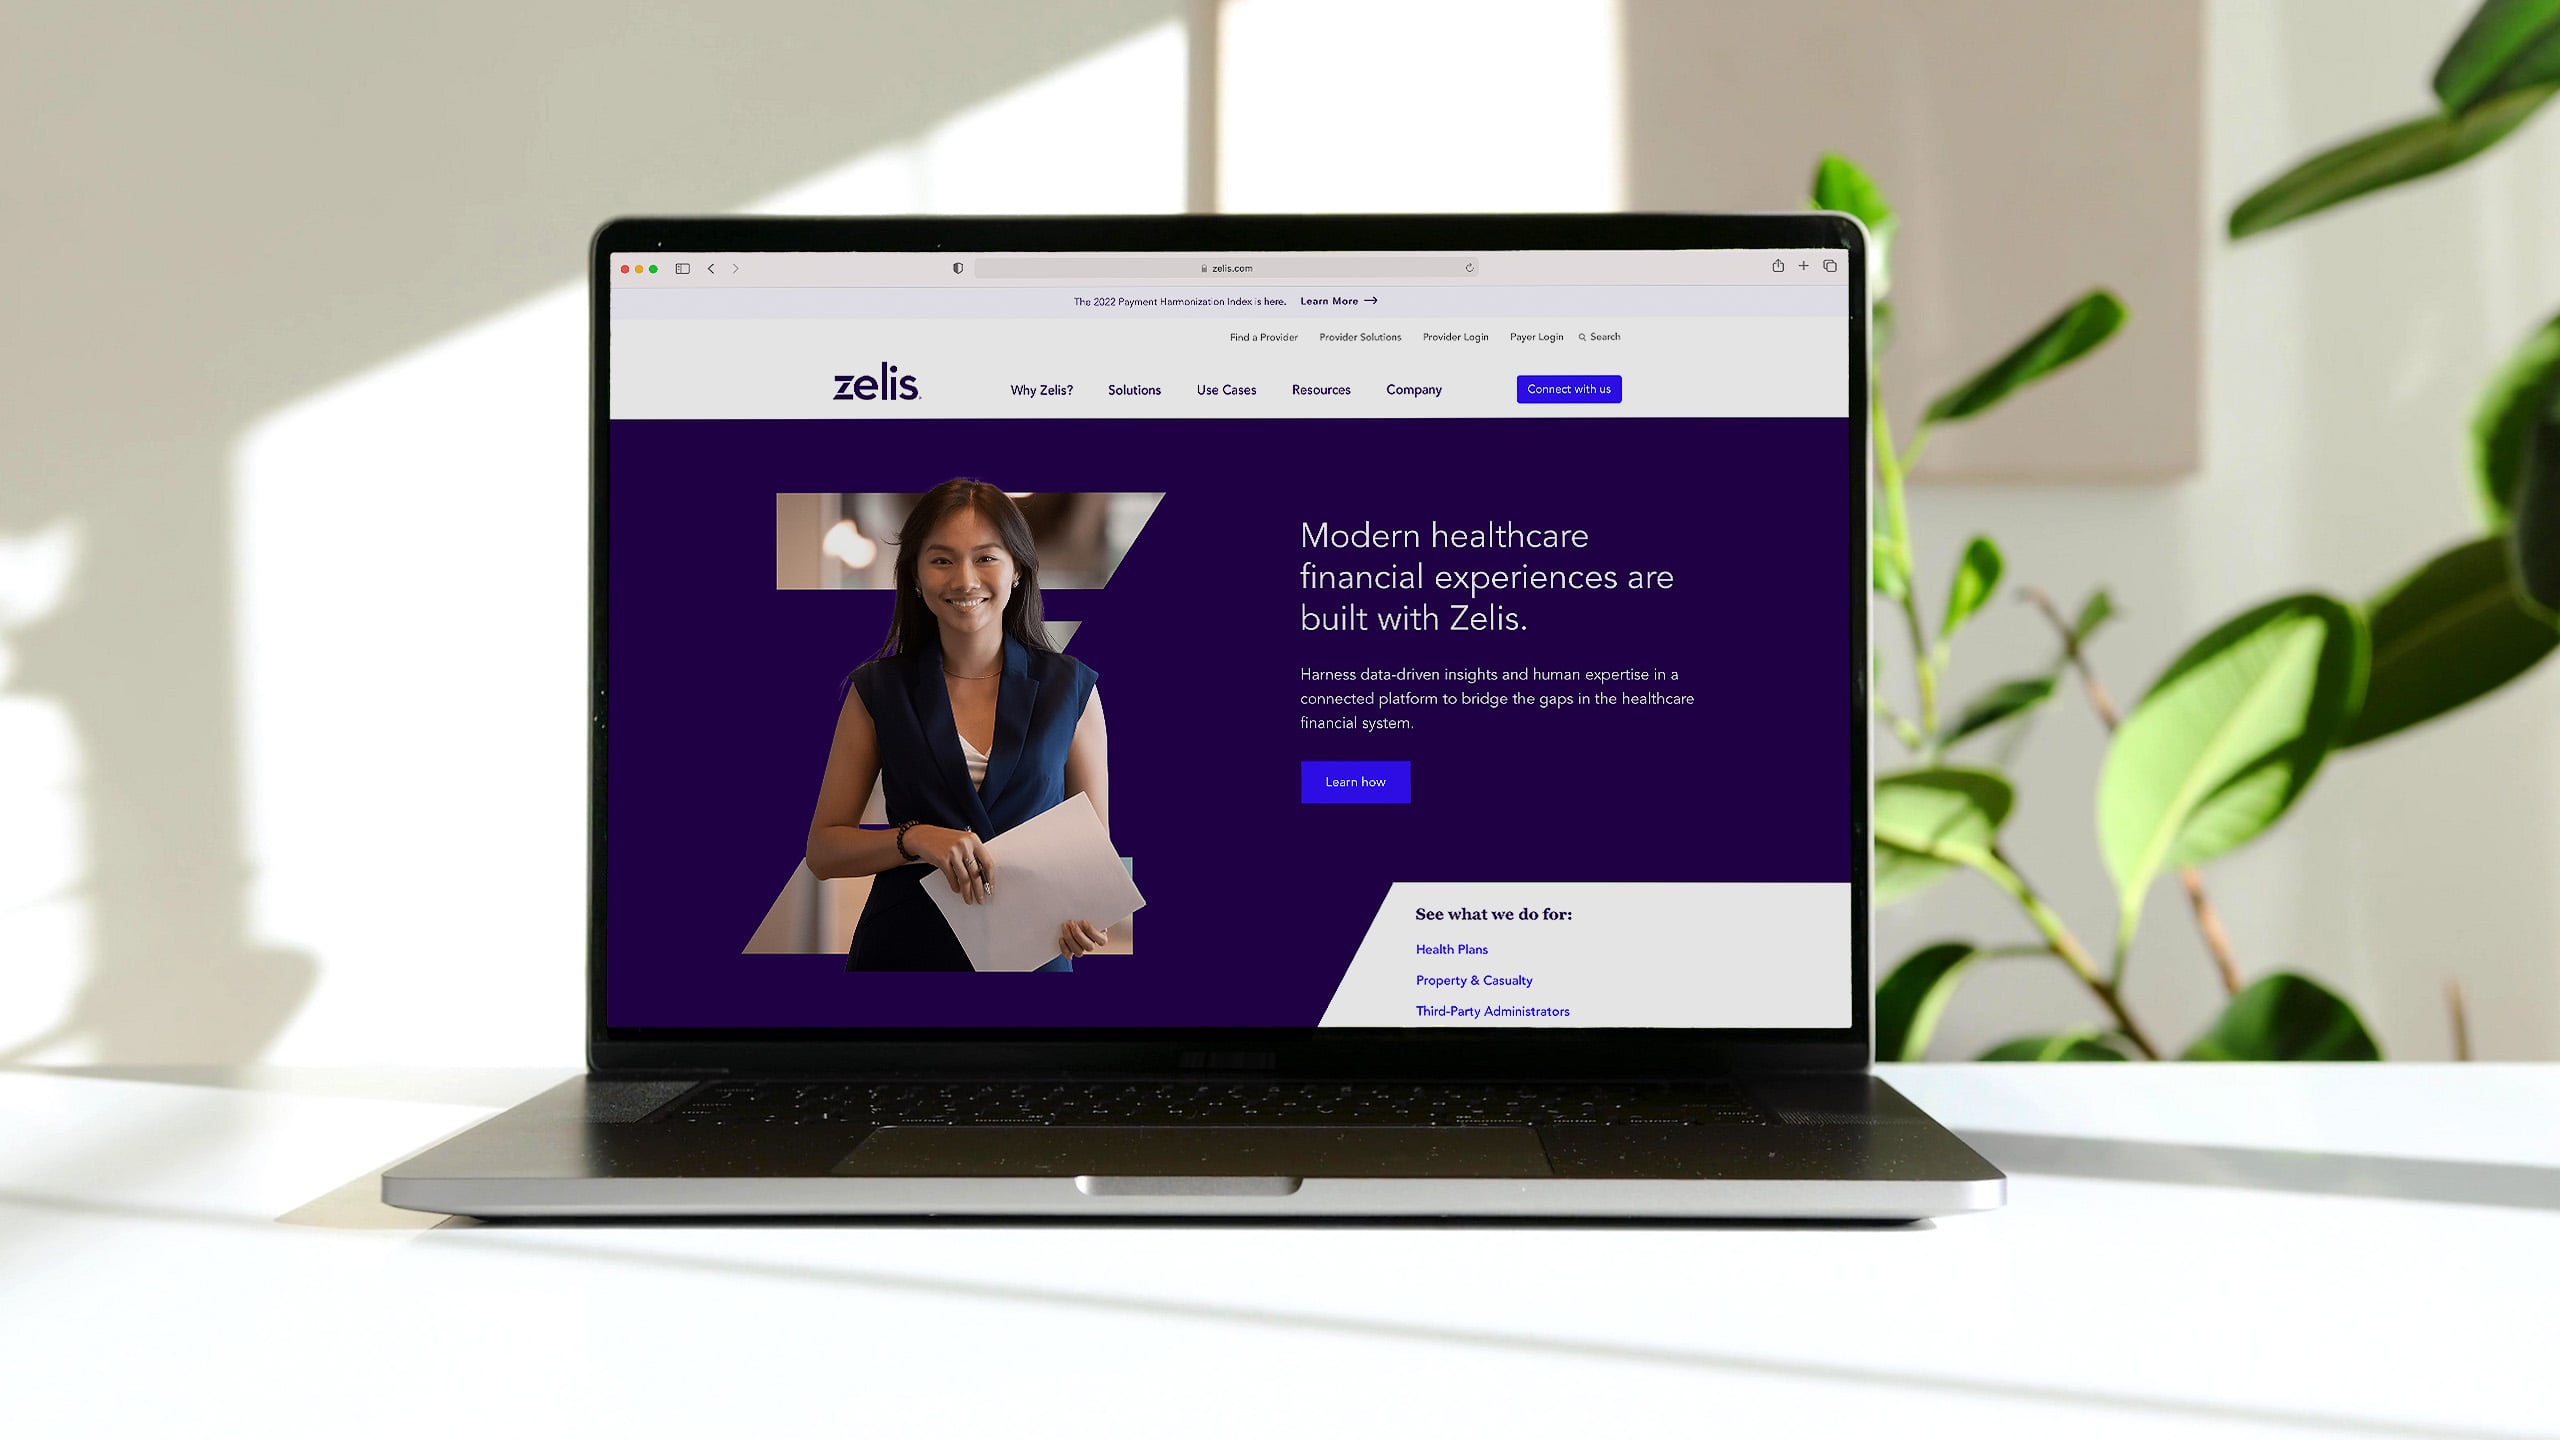 Zelis marketing website on laptop in sun